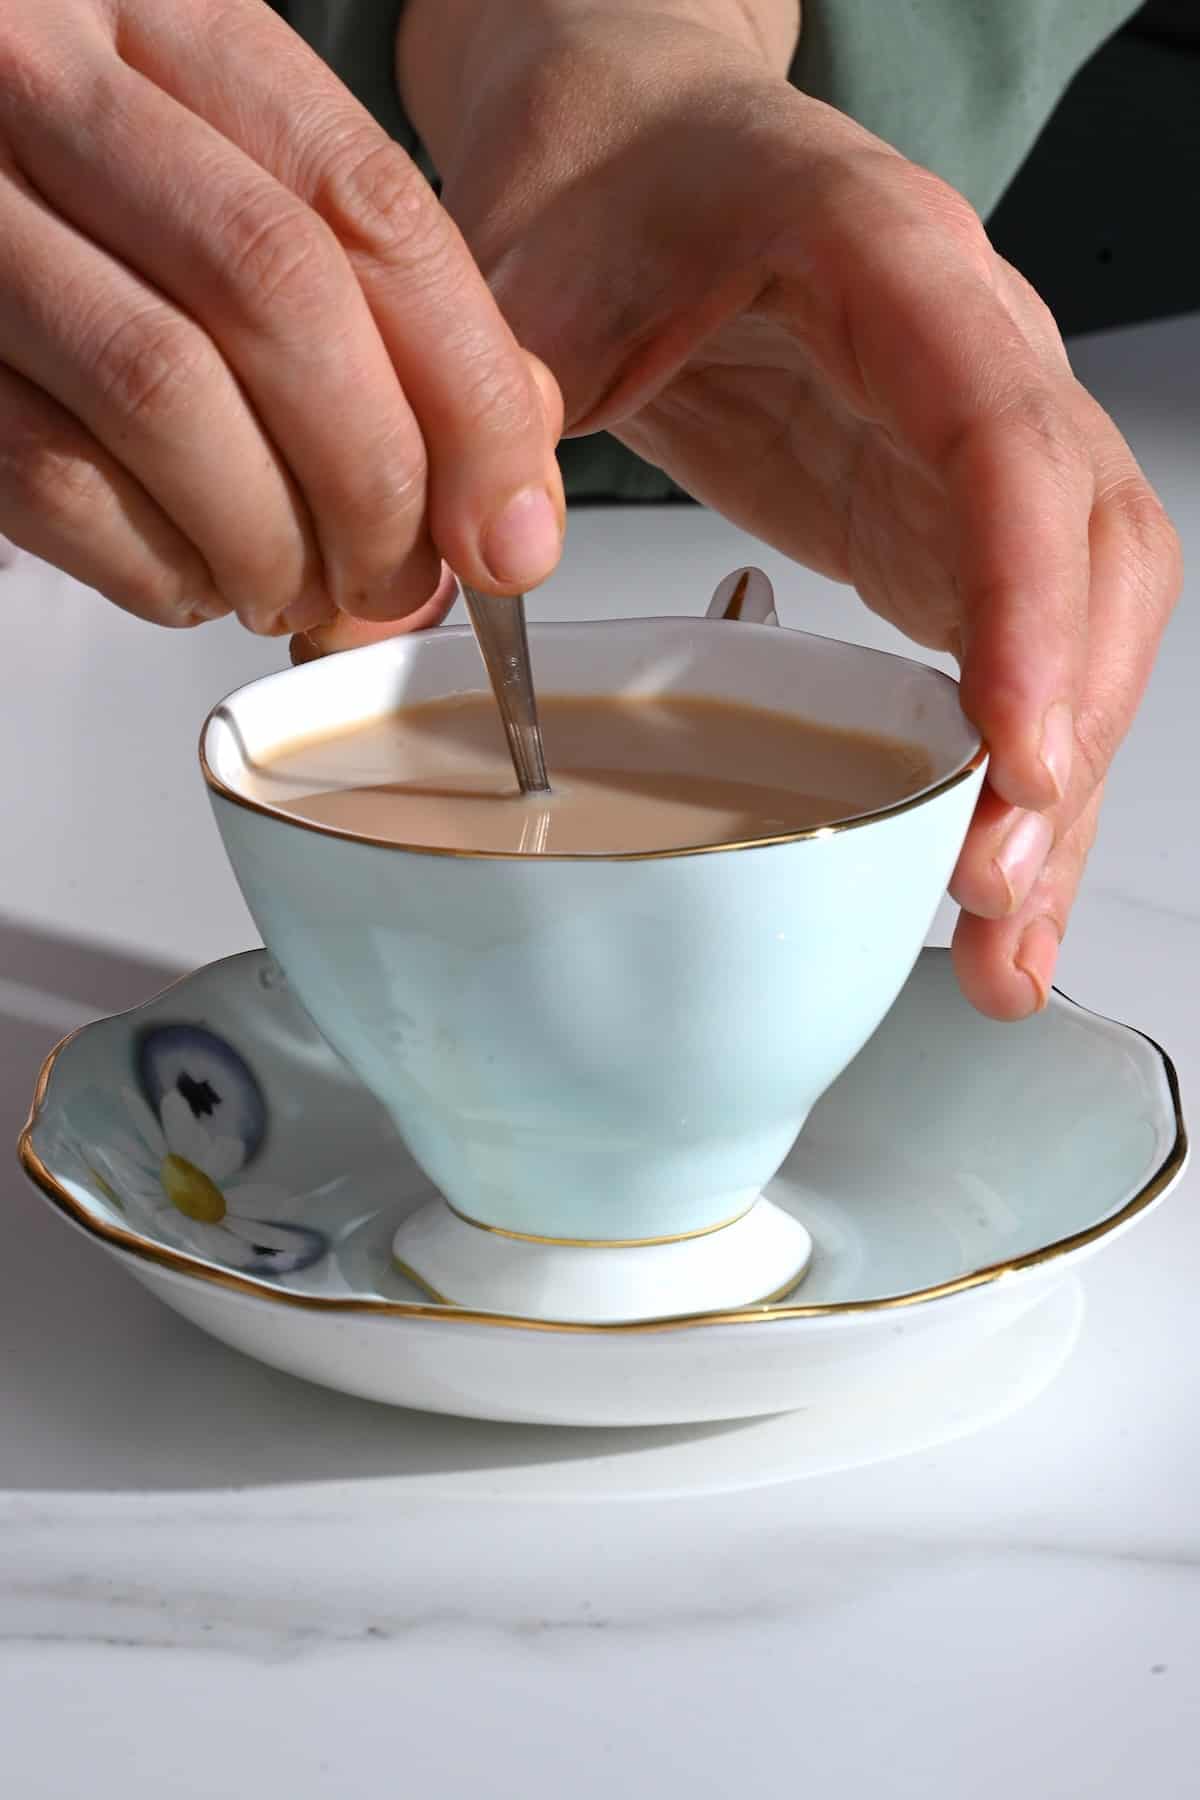 https://www.alphafoodie.com/wp-content/uploads/2022/03/Milk-Tea-Stirring-milk-tea-in-a-cup.jpeg